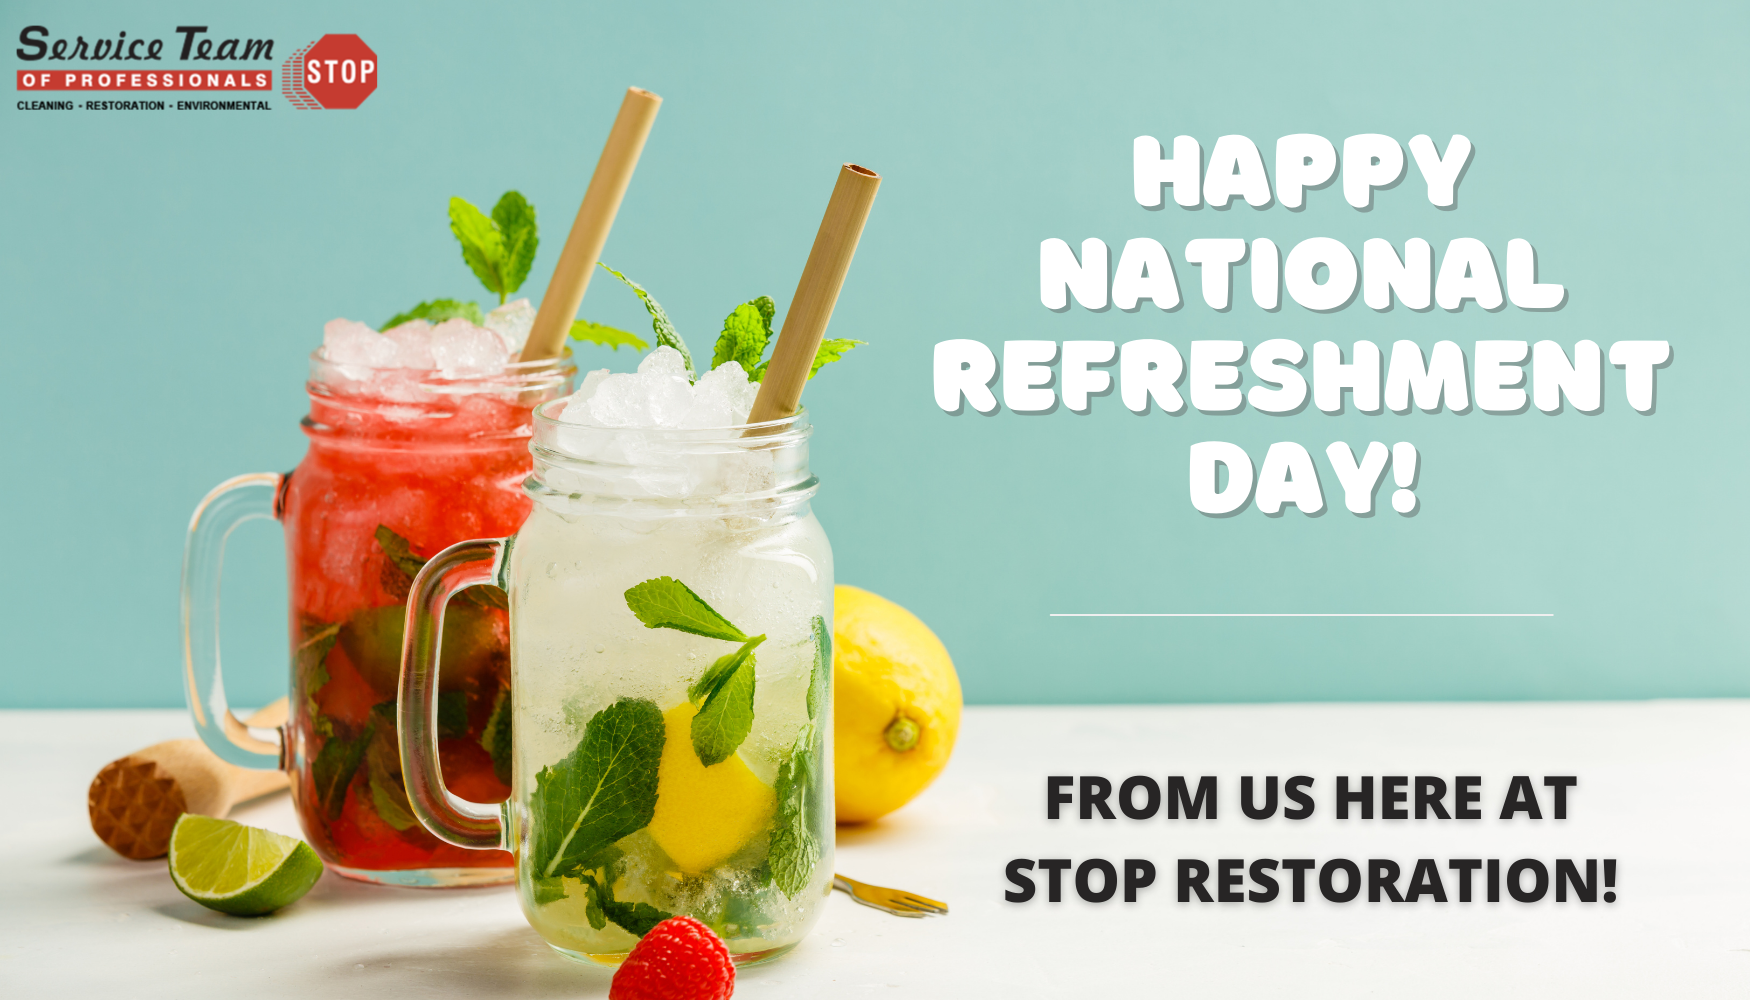 National Refreshment Day!